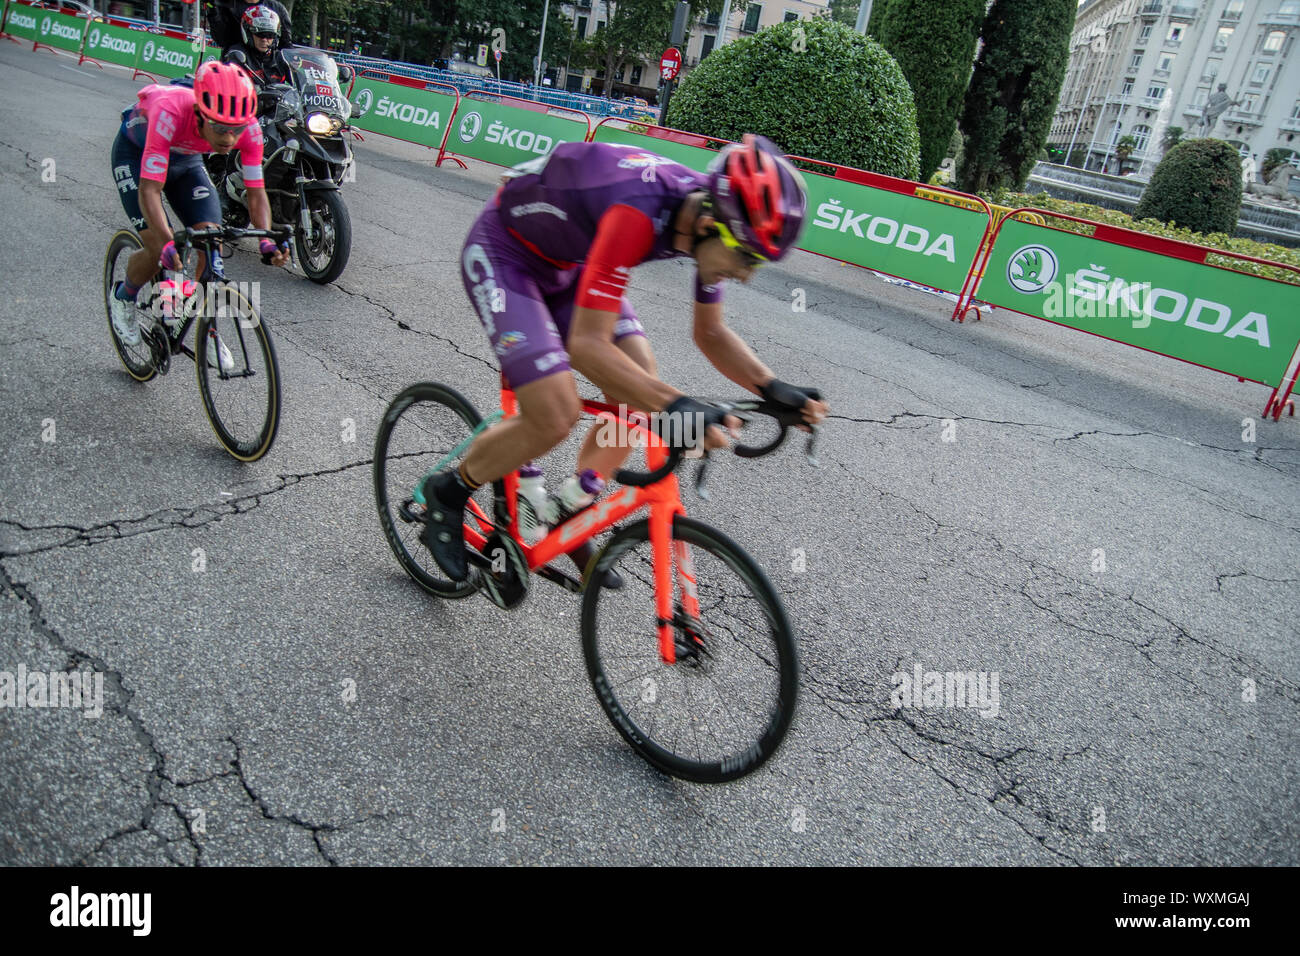 Vuelta España cycle race finish in square cibeles Stock Photo